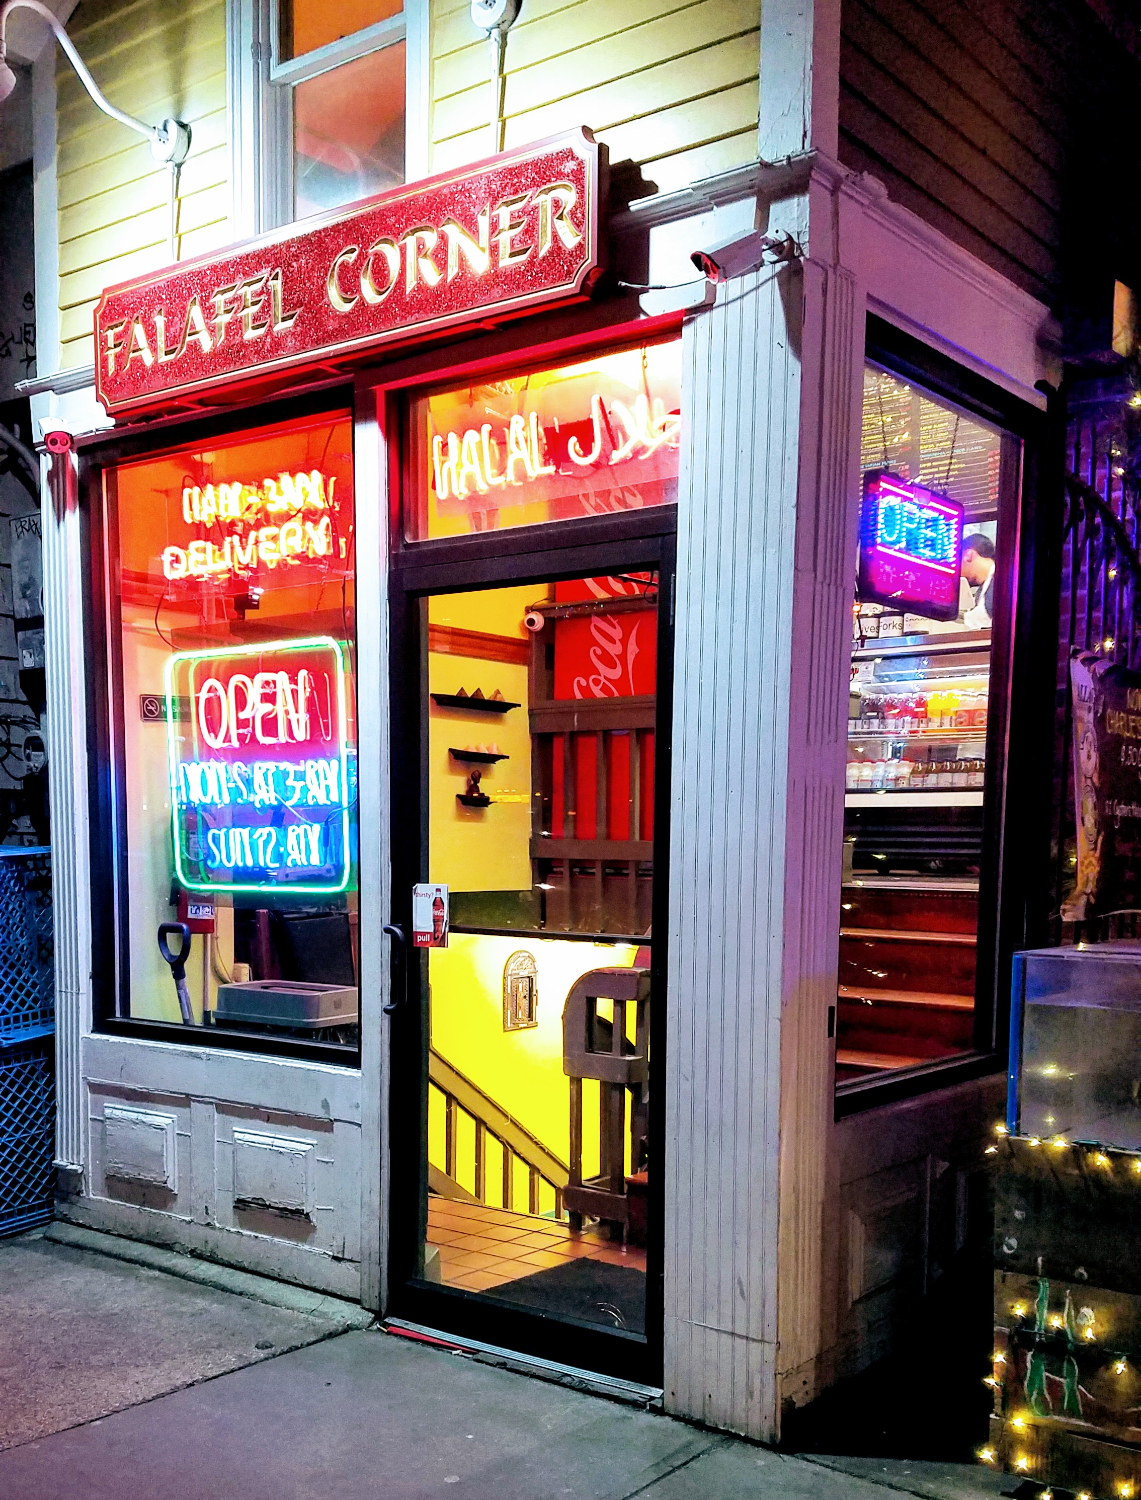 a small corner falafel restaurant colorfully lit